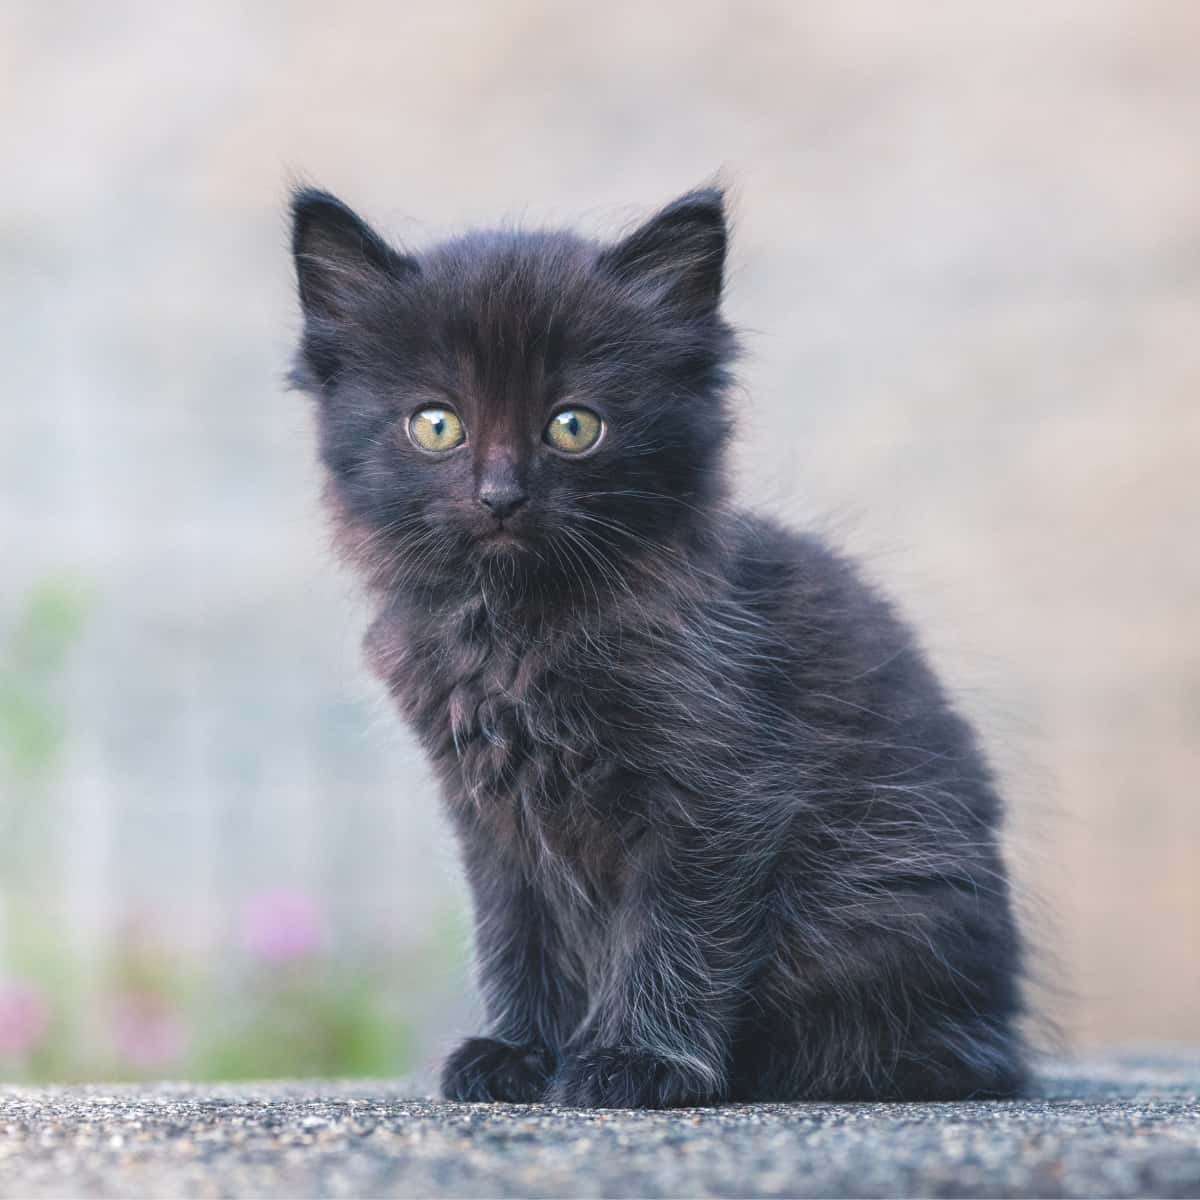 Kitten sitting on a ledge.